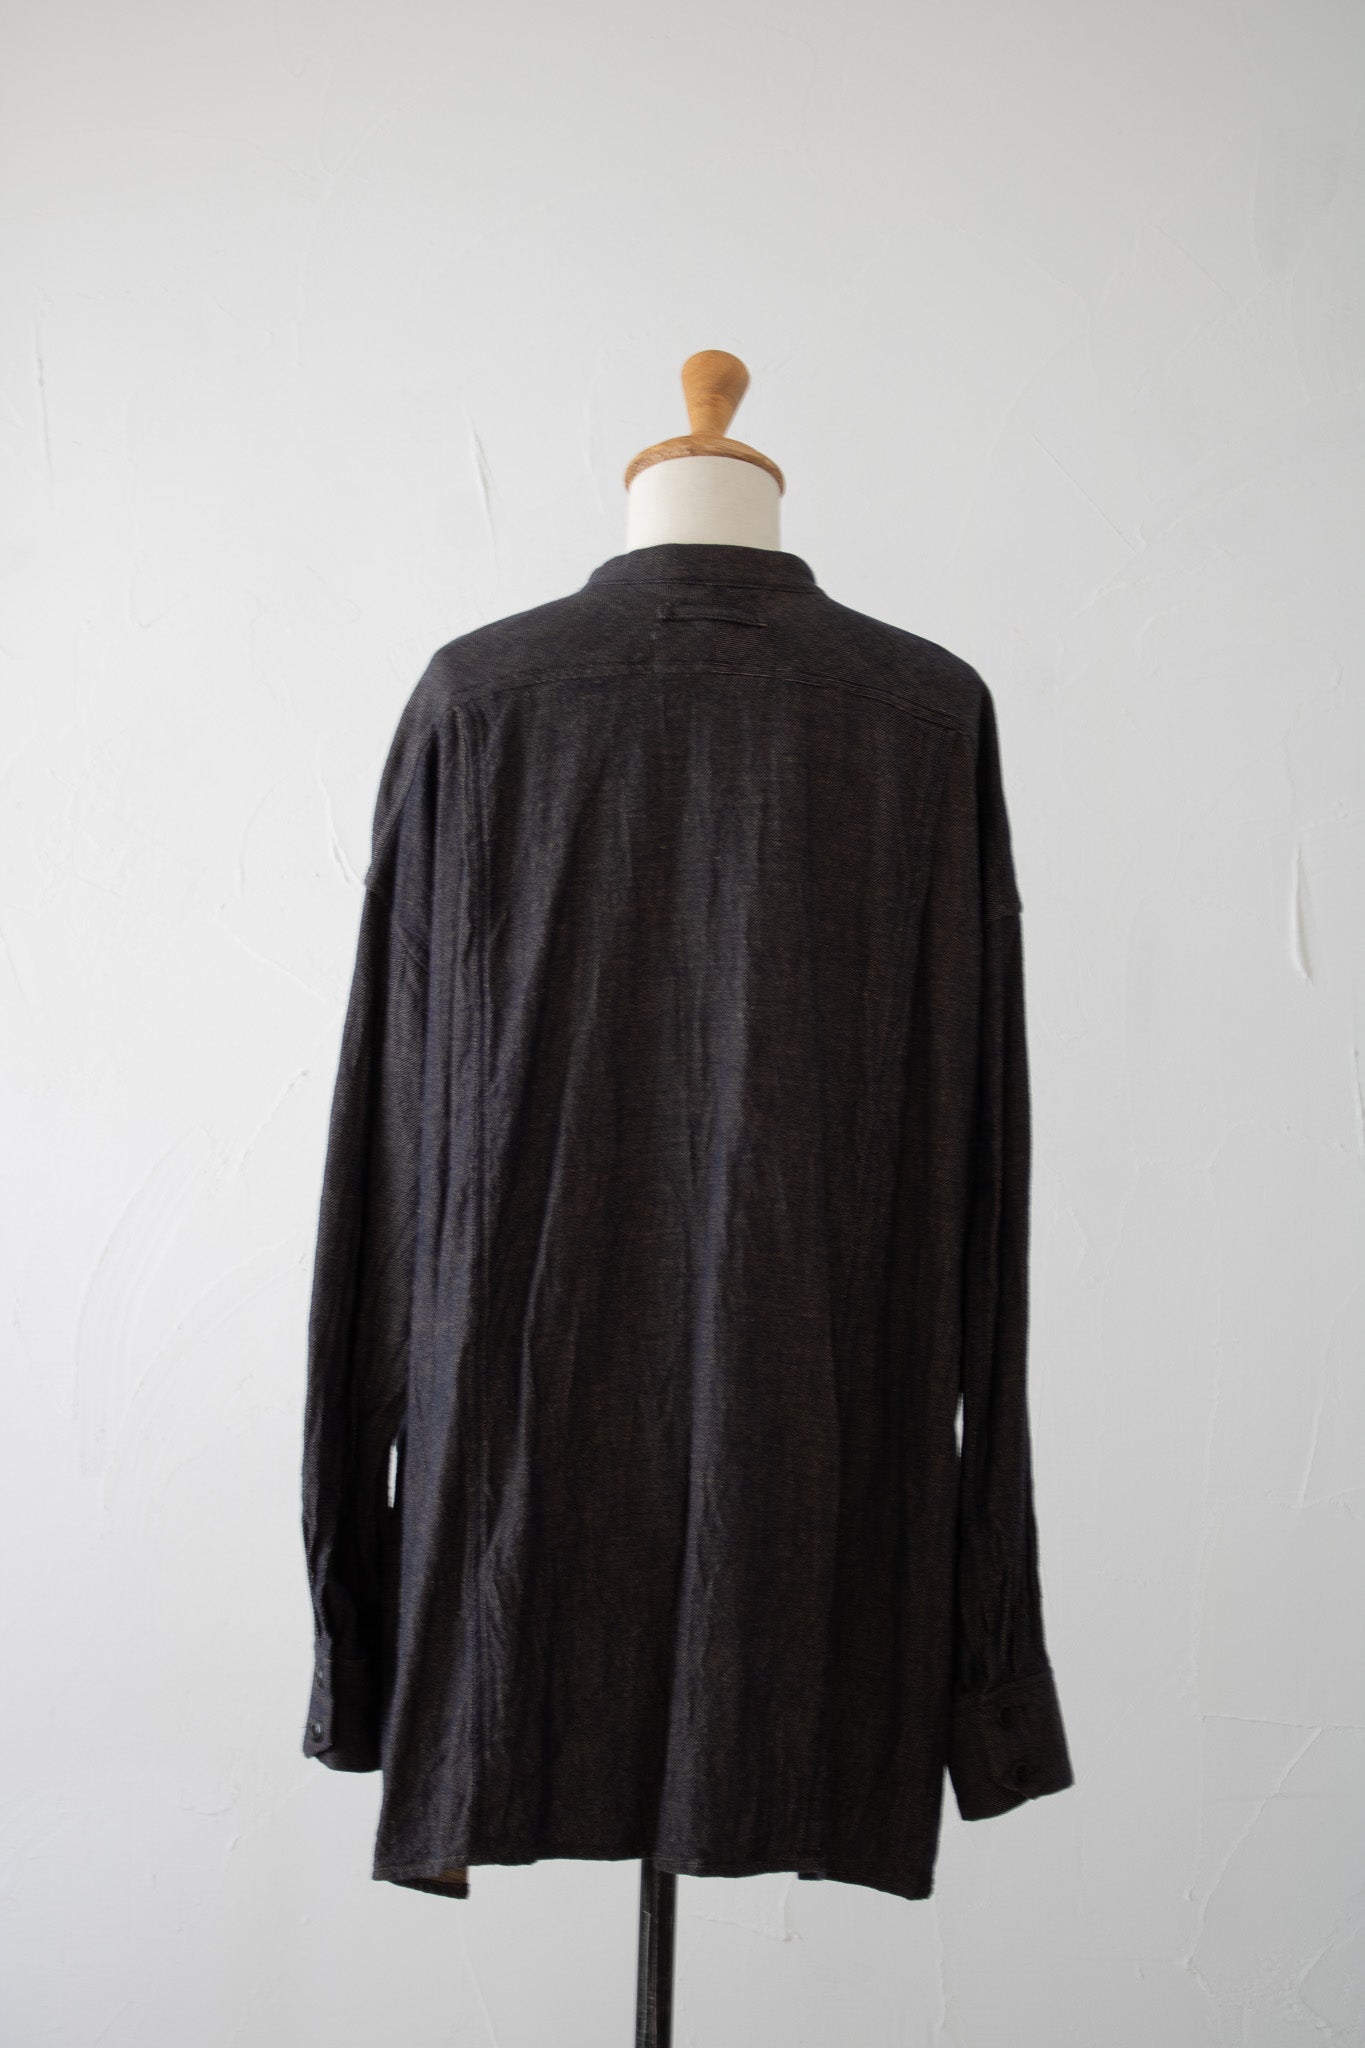 lama shirt K505 cotton twill navy/sepia